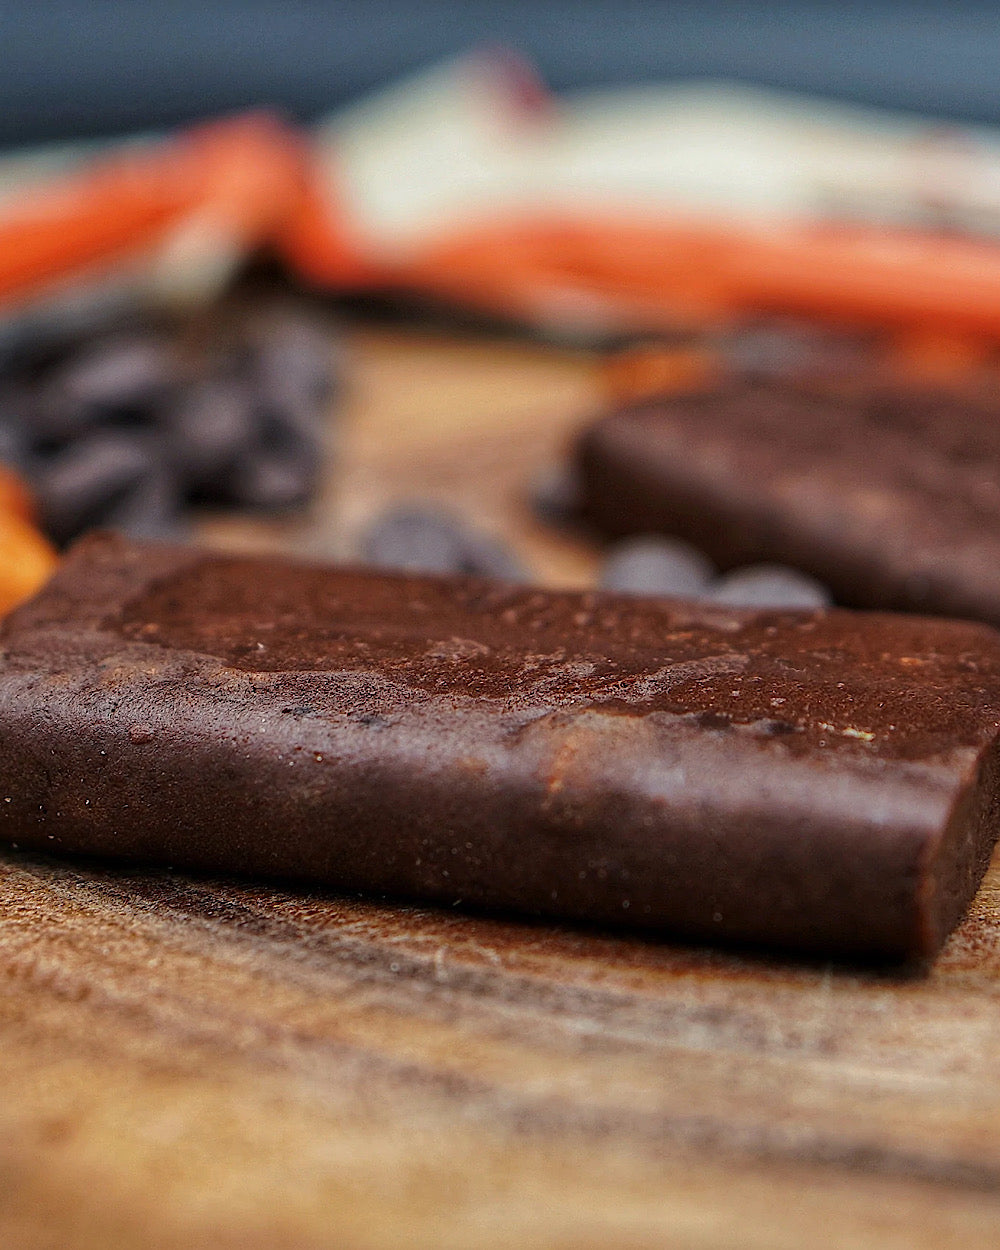 Uphold Bakery: Fudge Brownie Nutrition Bars